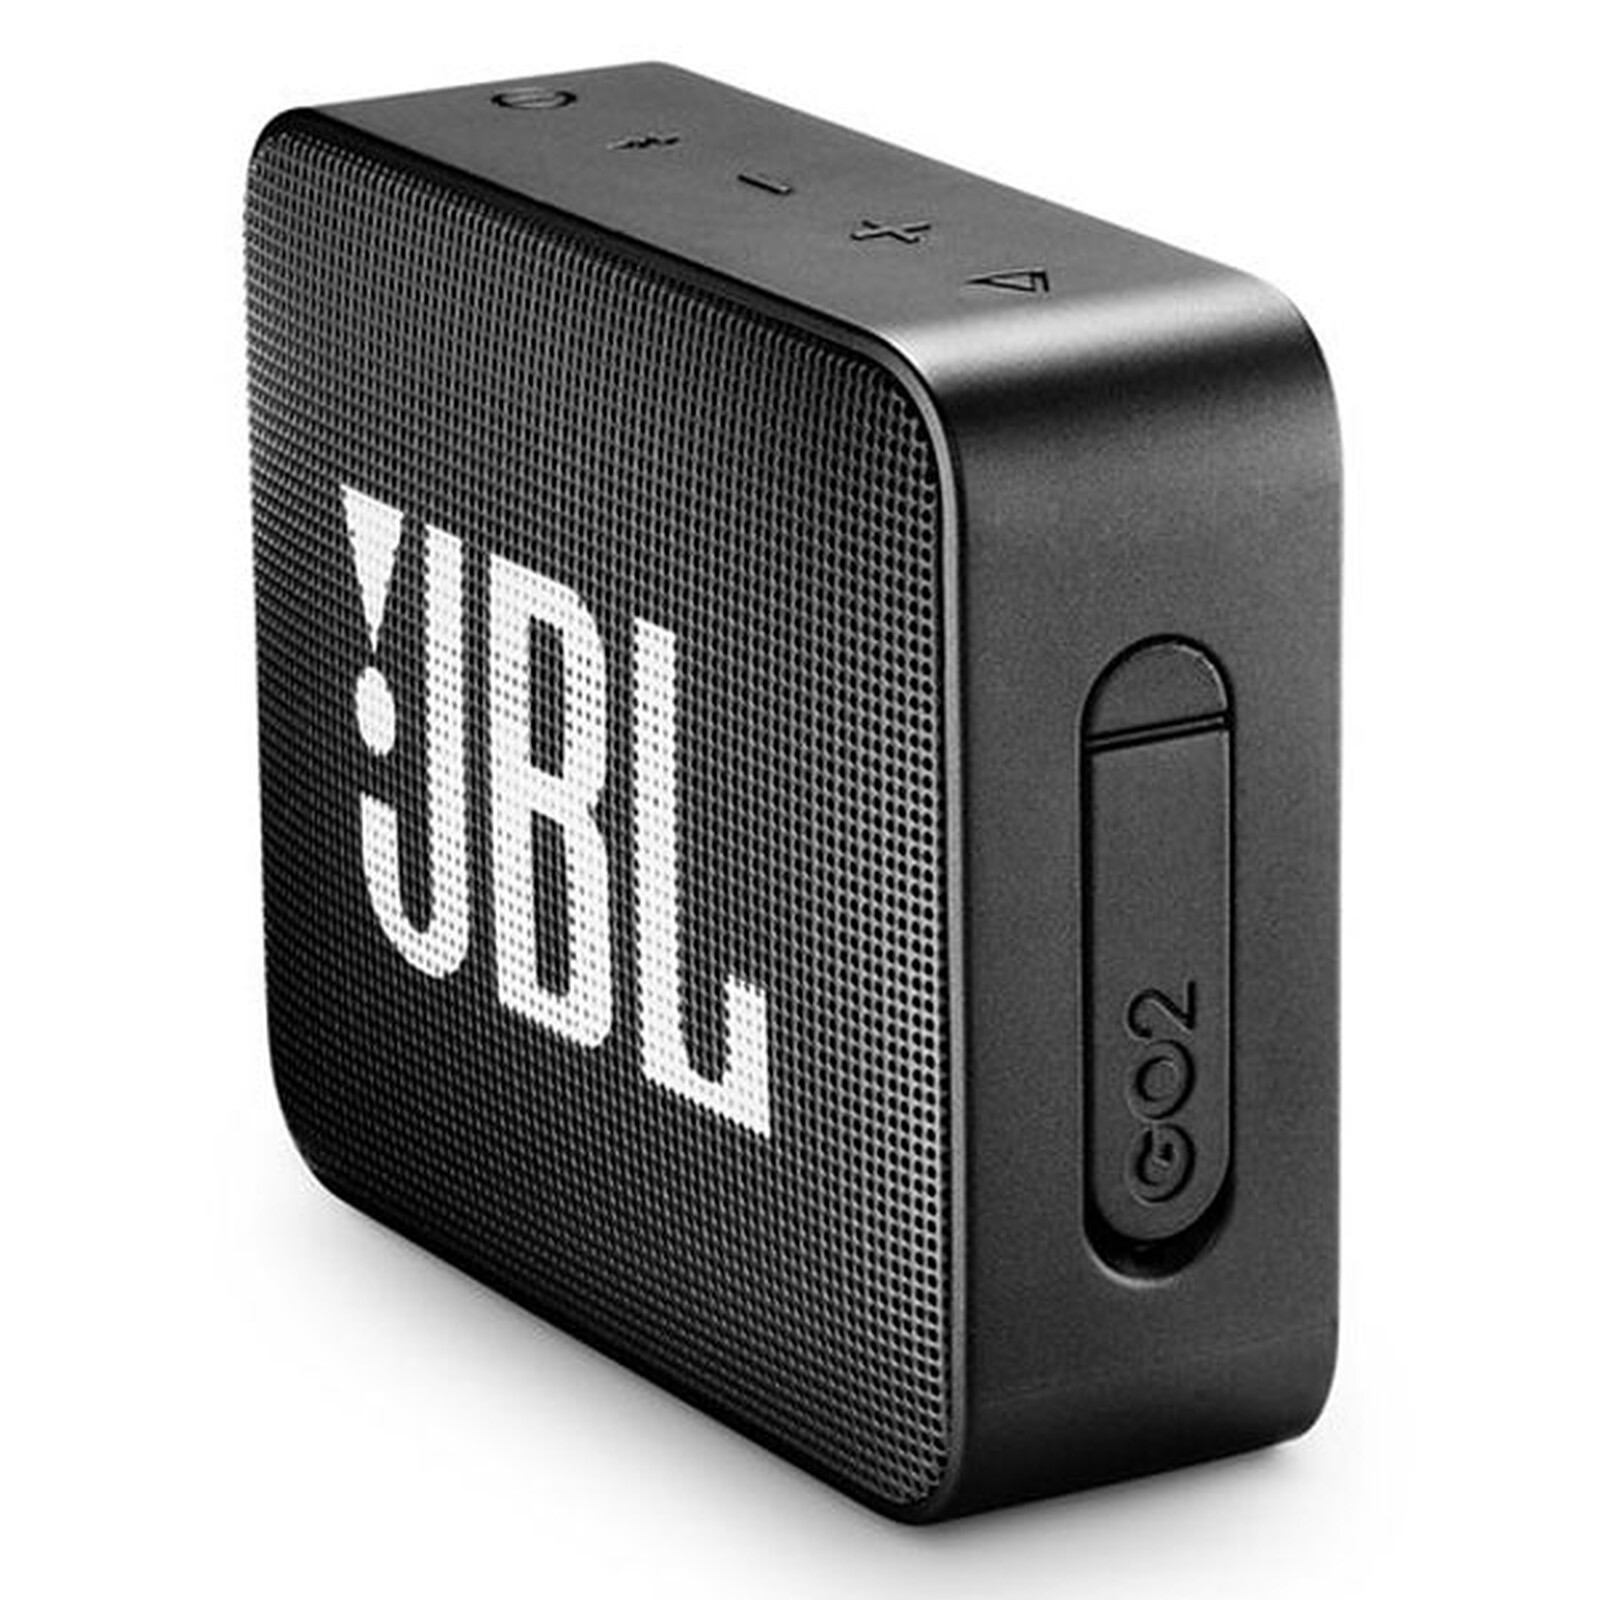 Enceinte portable JBL Go Essential Noir